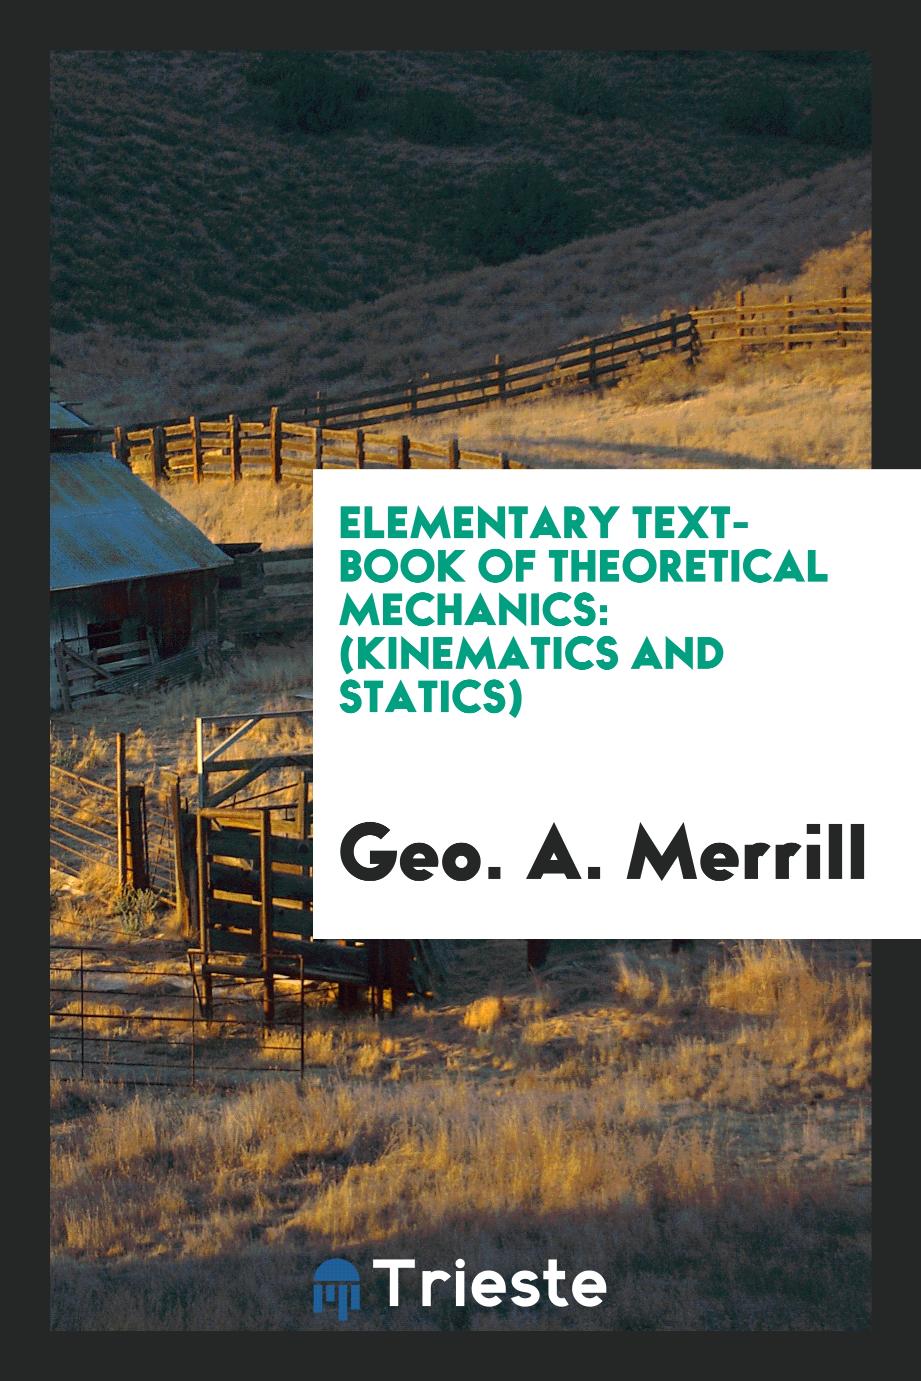 Geo. A. Merrill - Elementary Text-Book of Theoretical Mechanics: (Kinematics and Statics)